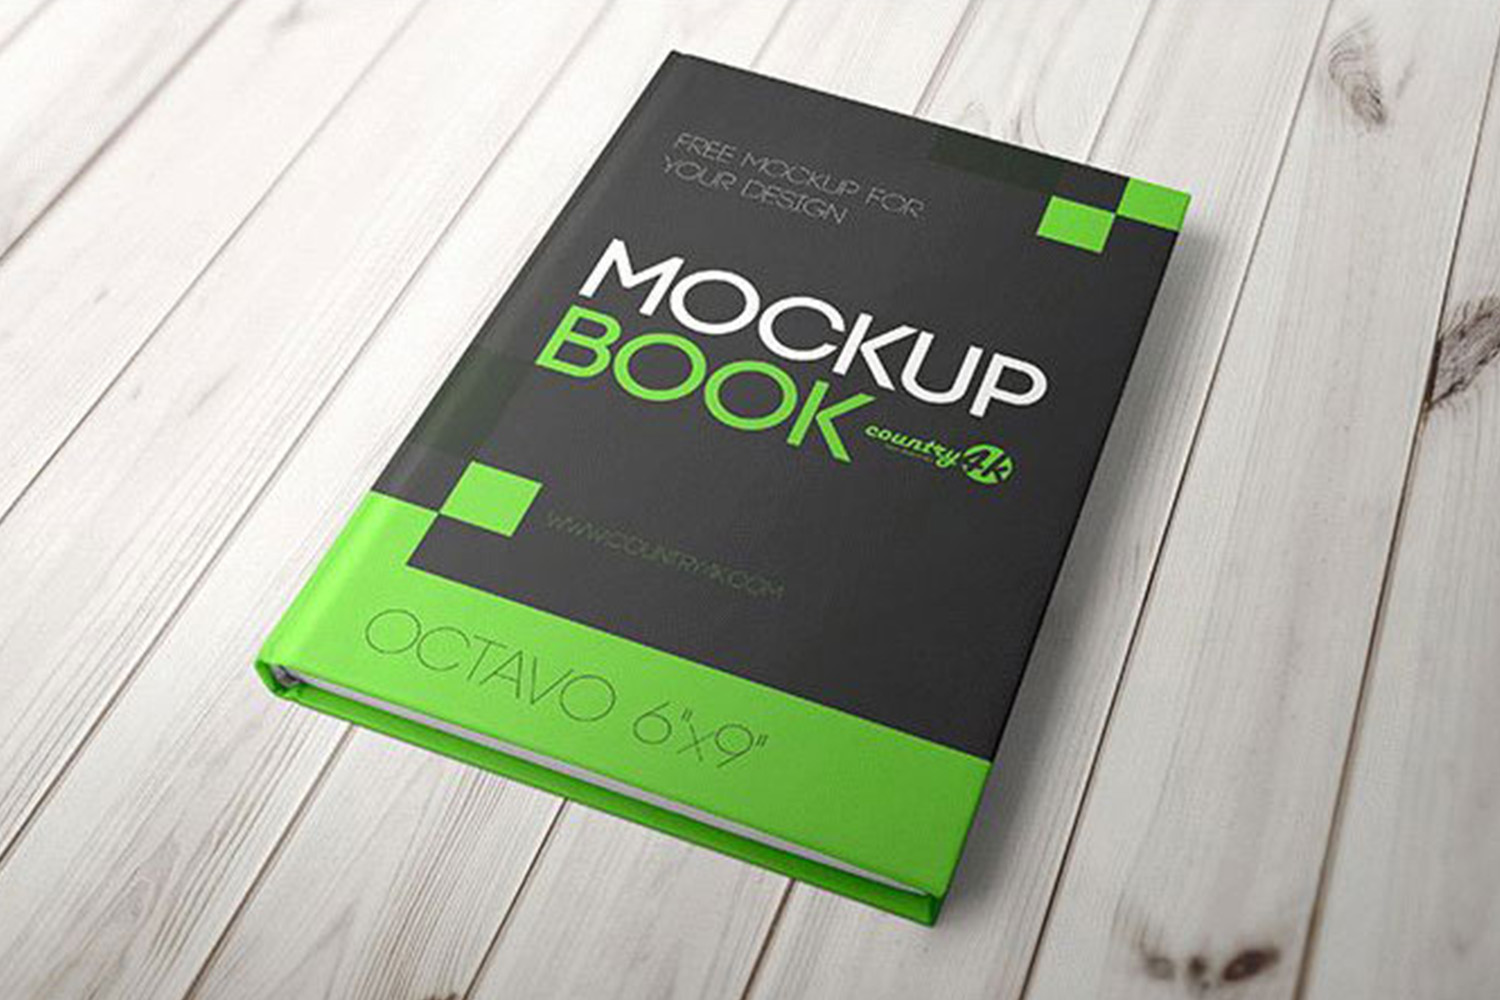 Hardcover Book Mockup Free Download